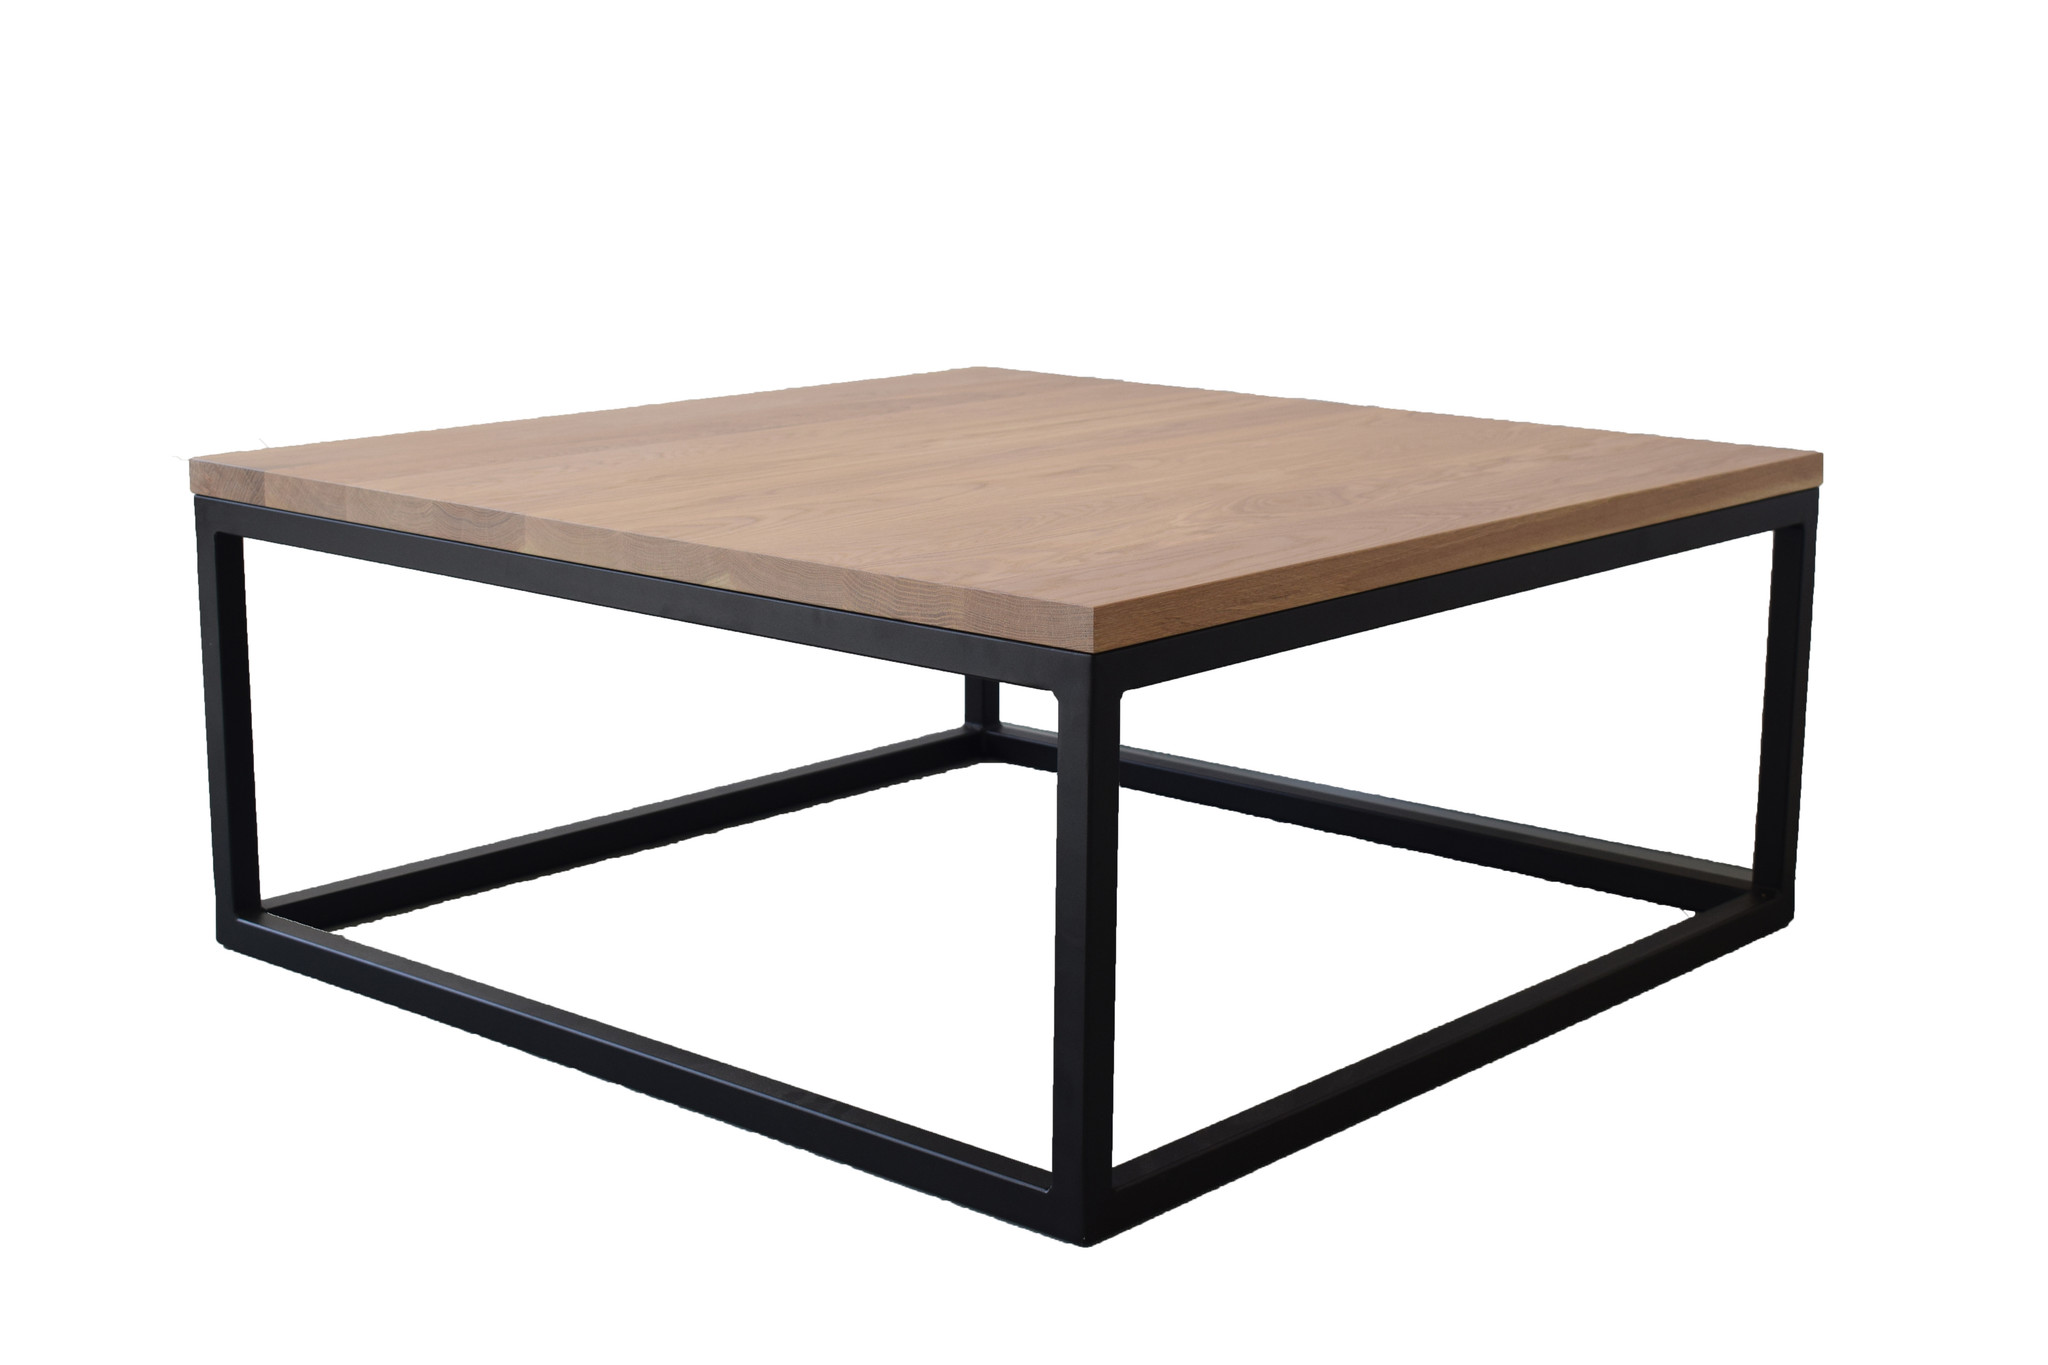 Claire meerderheid roman Eiken salontafel vierkant met zwart stalen frame | 100x100cm | Massief -  Steiken meubelen